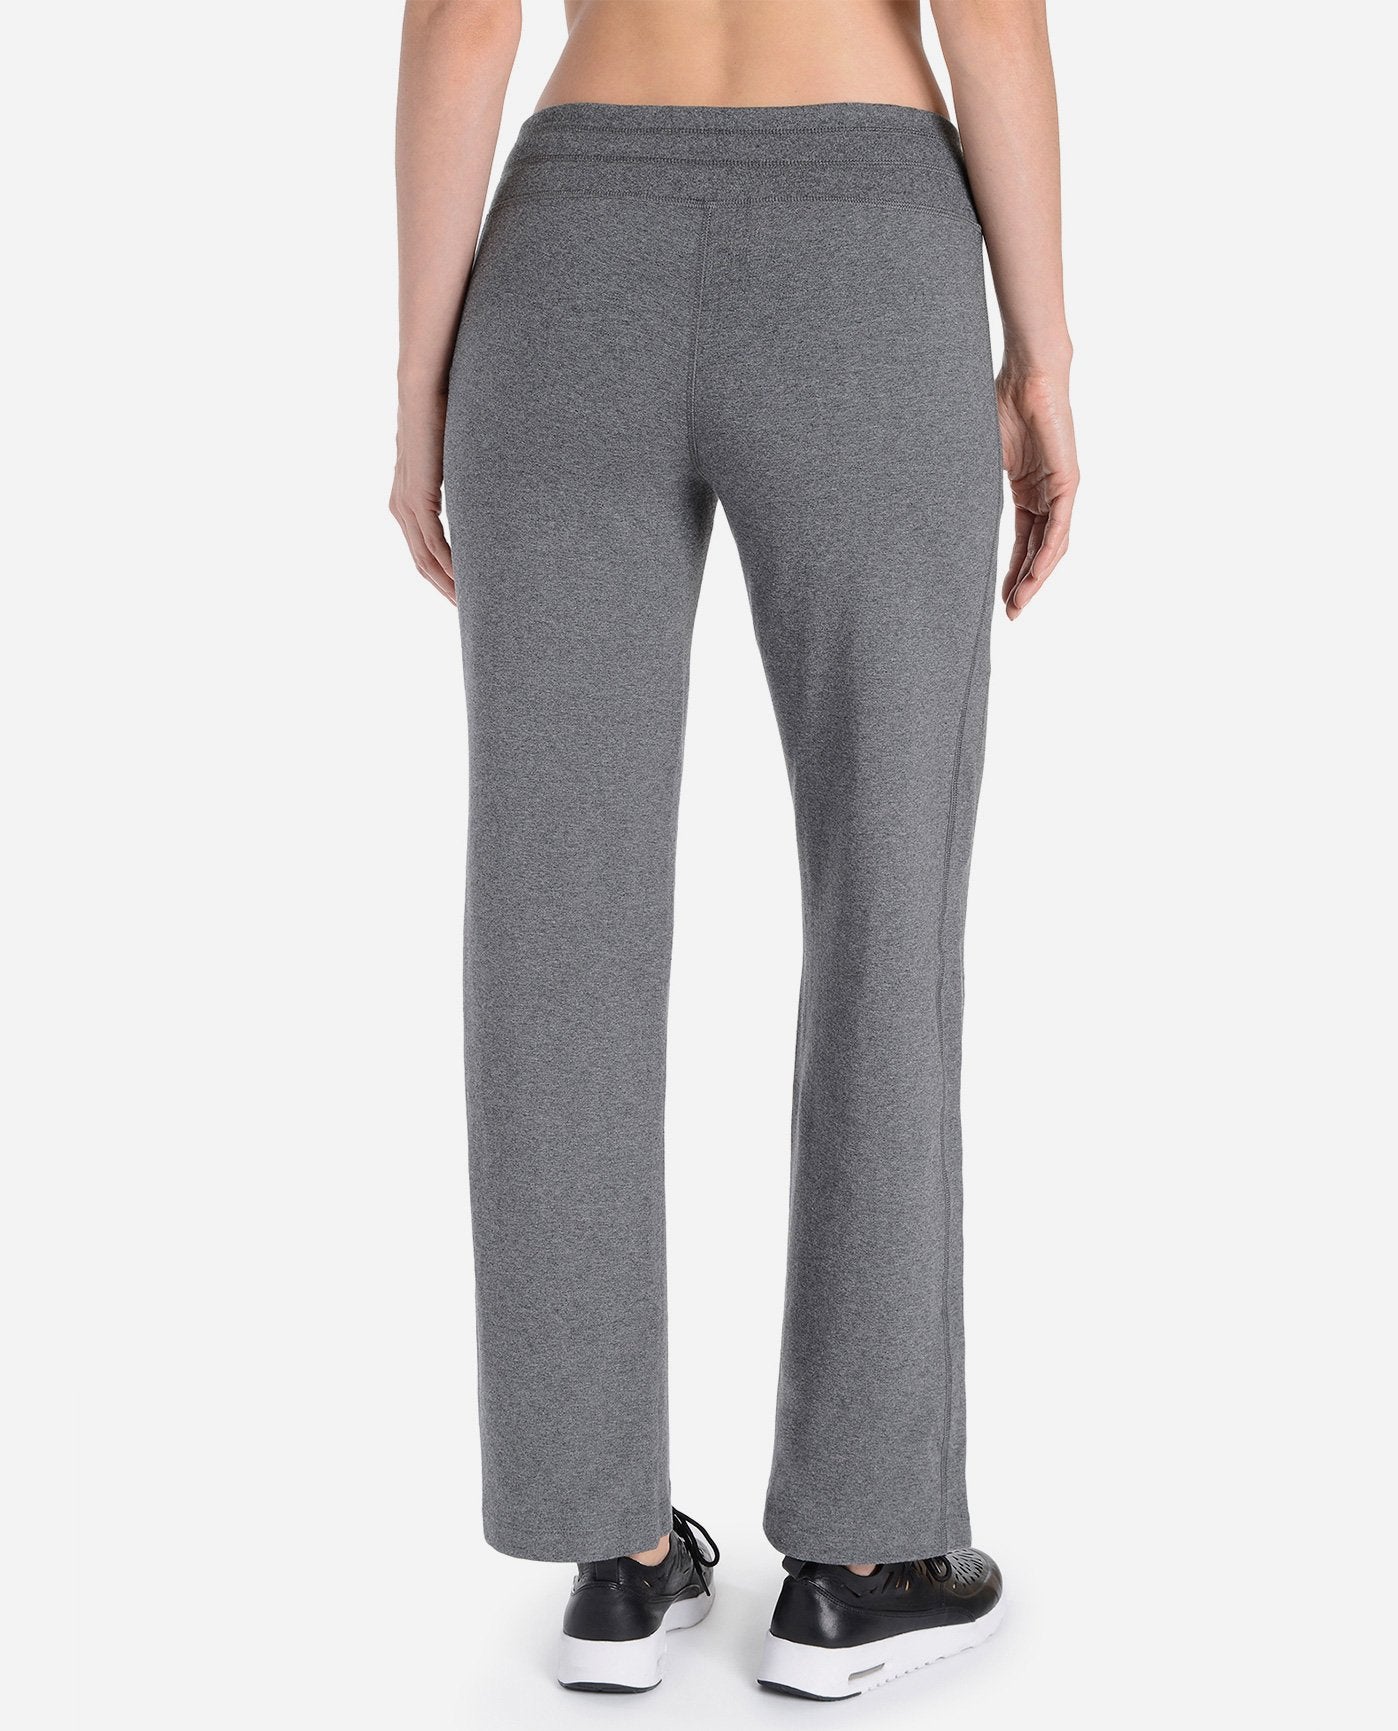 Danskin Solid Gray Active Pants Size XL - 55% off